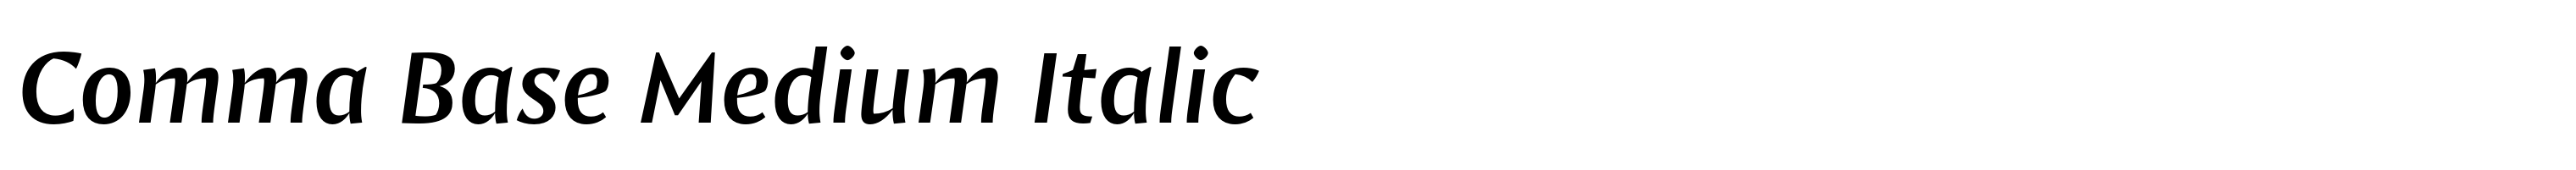 Comma Base Medium Italic